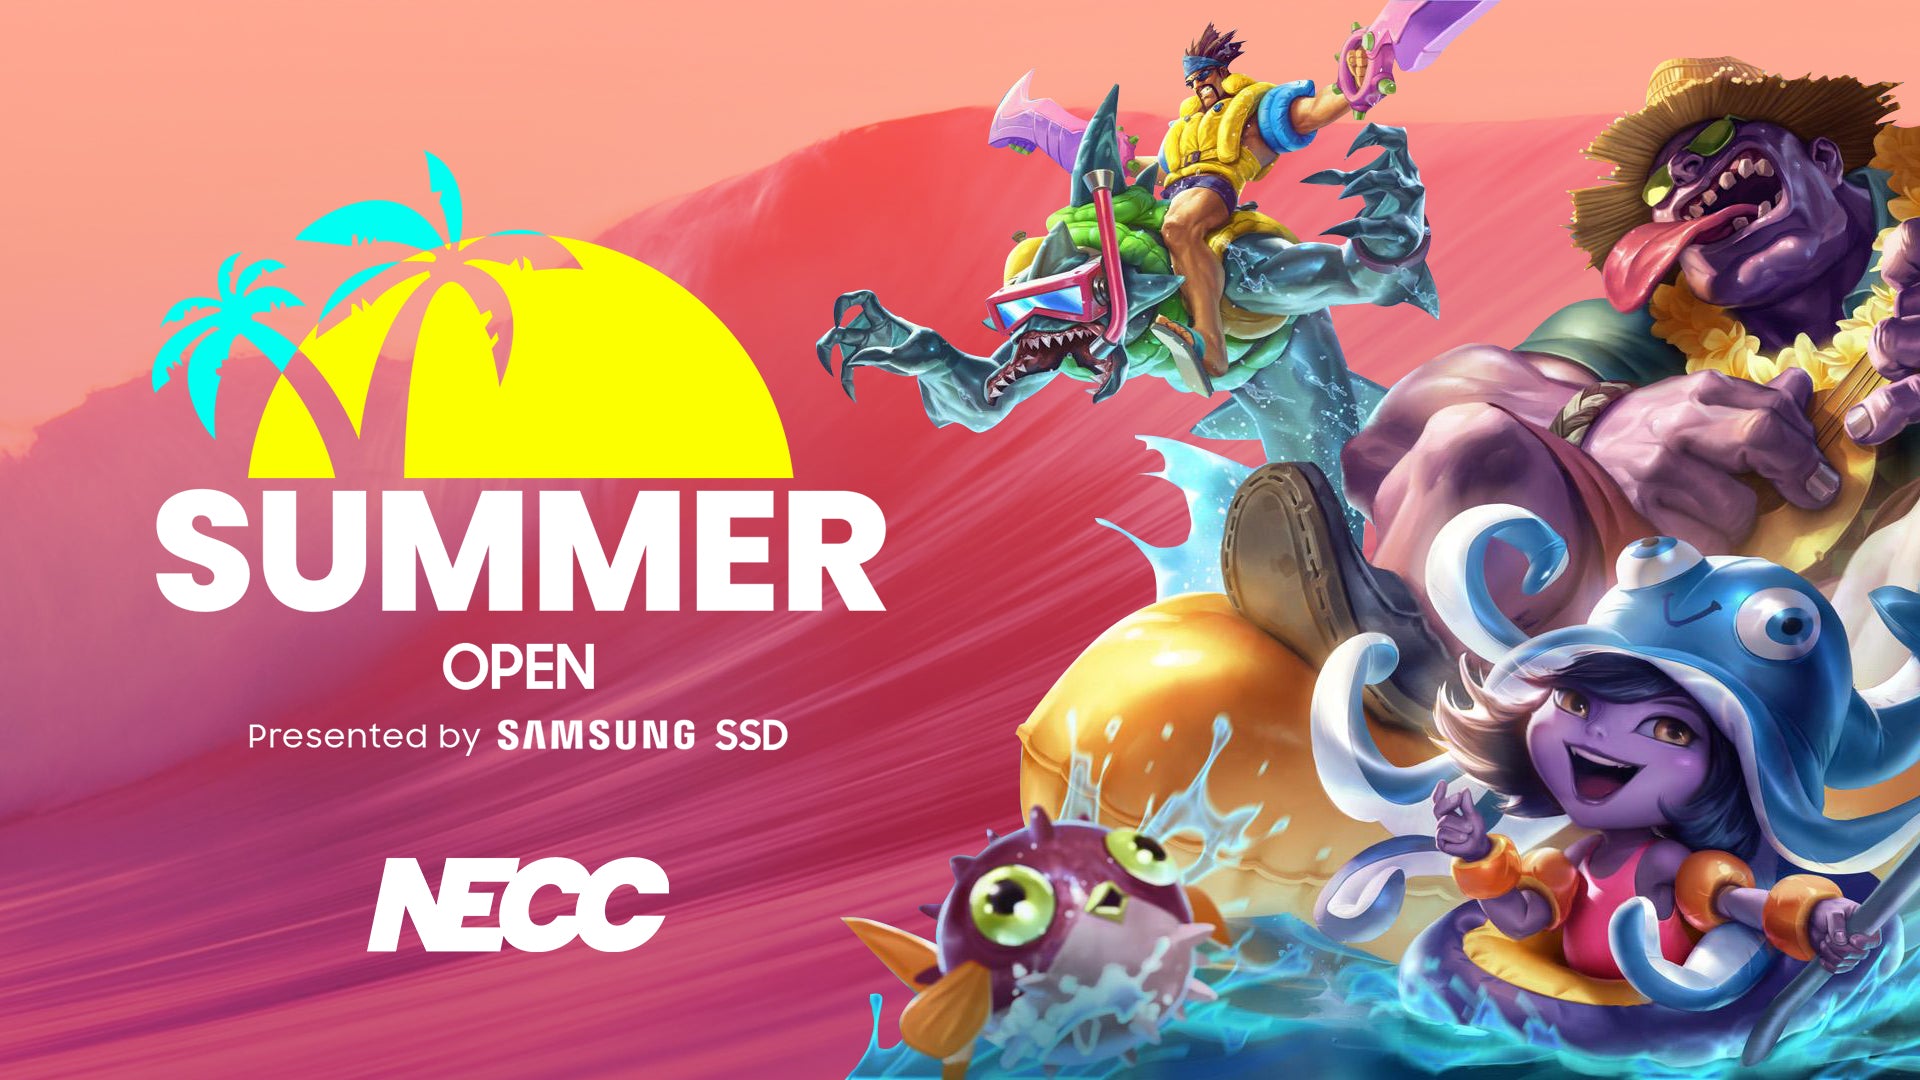 NECC Announces Summer Open League of Legends Tournament Presented by Samsung SSD